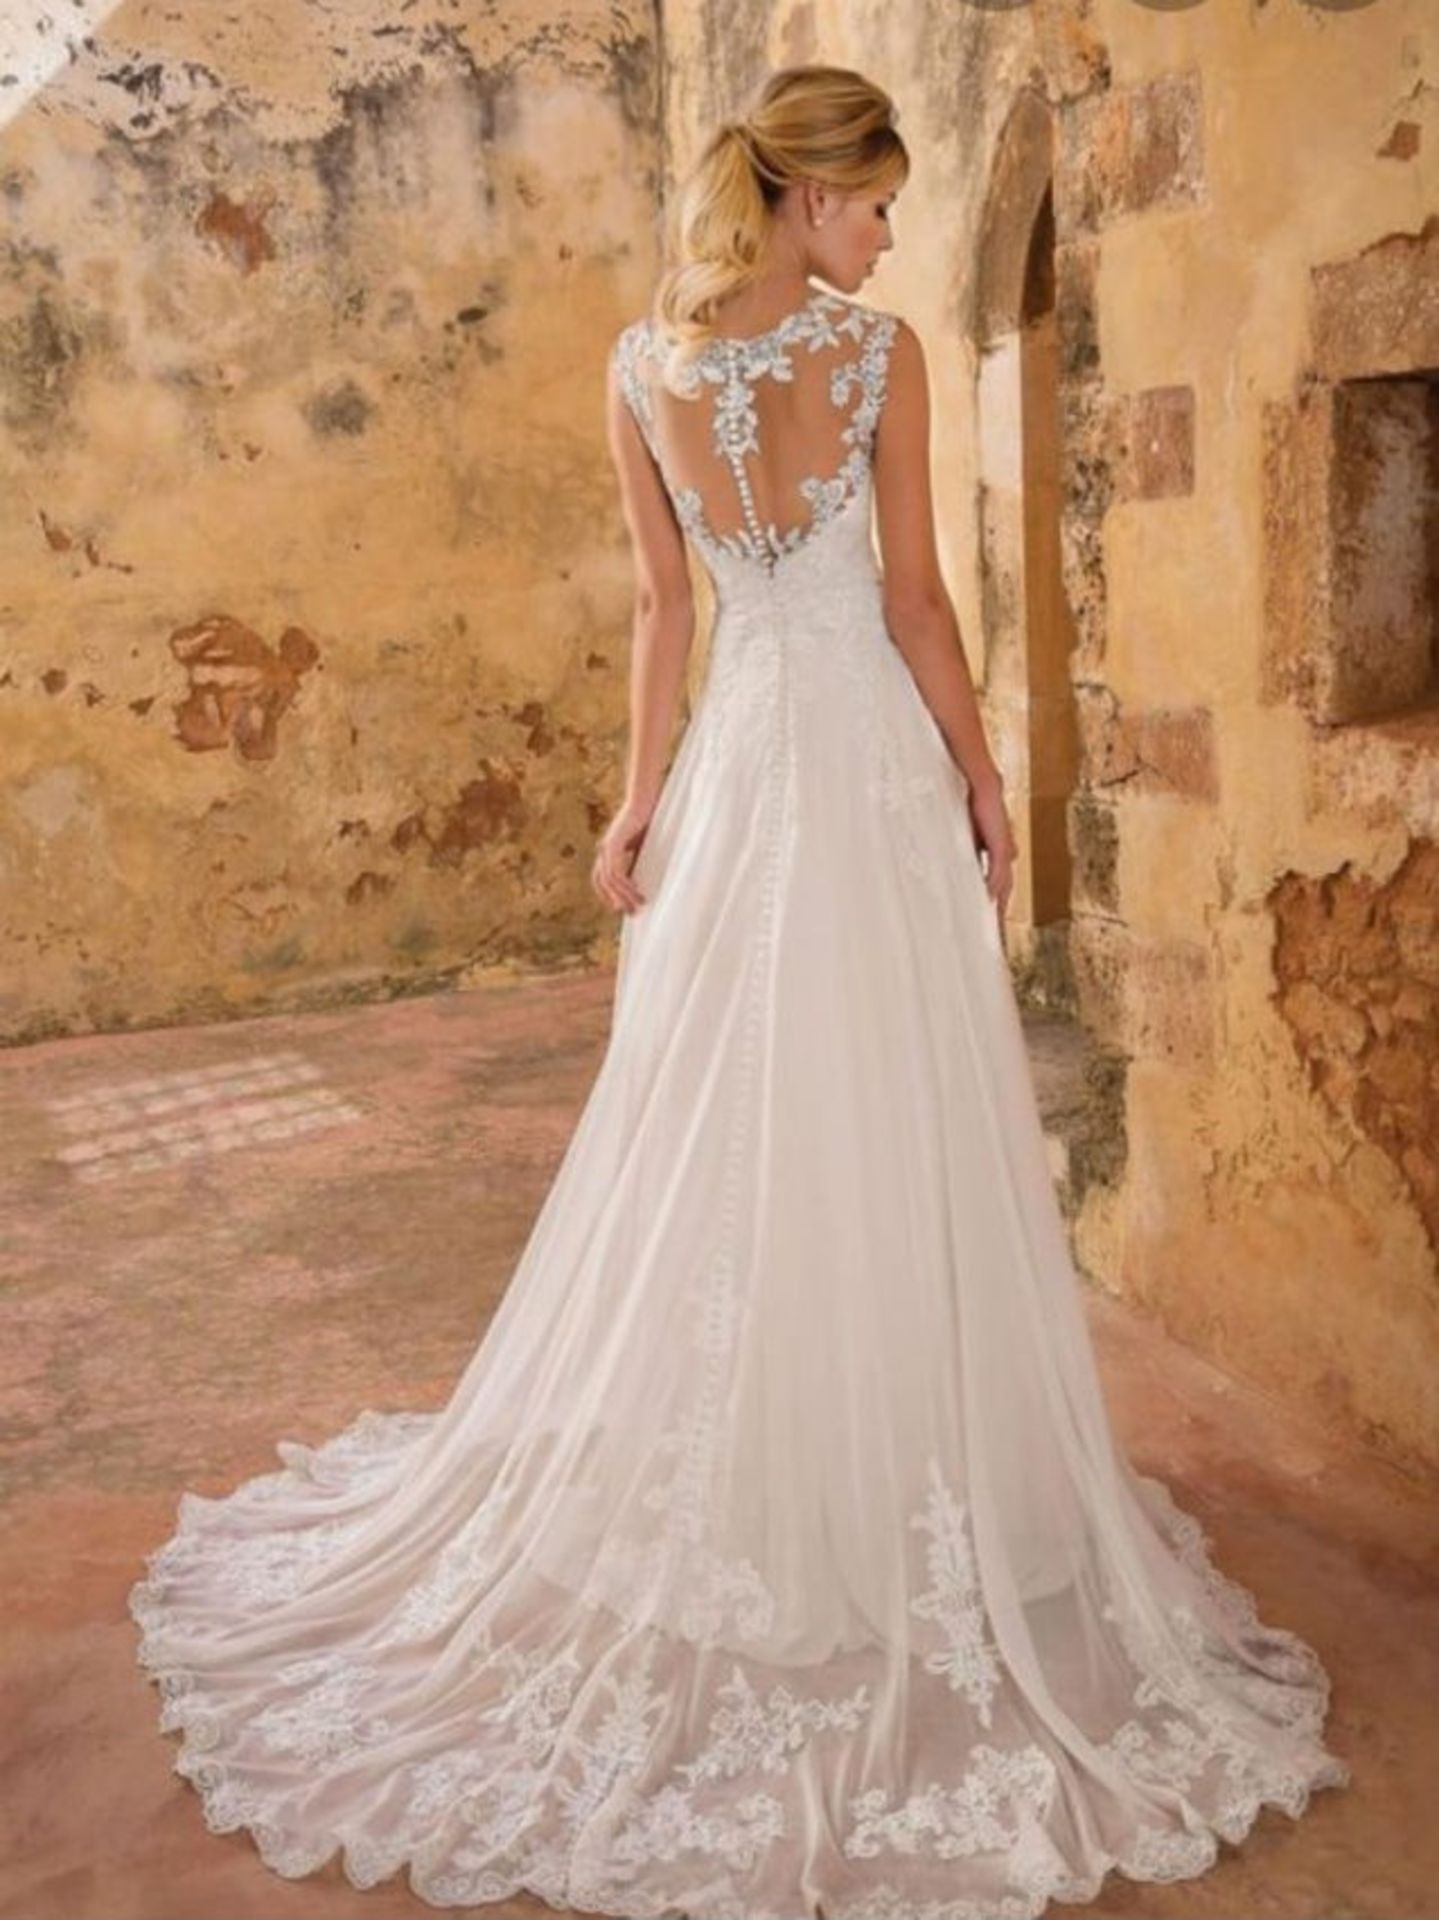 1 x Justin Alexander Designer Beaded Venice Lace A-line Wedding Bridal Dress - Size 16 - RRP £1,545 - Image 2 of 6